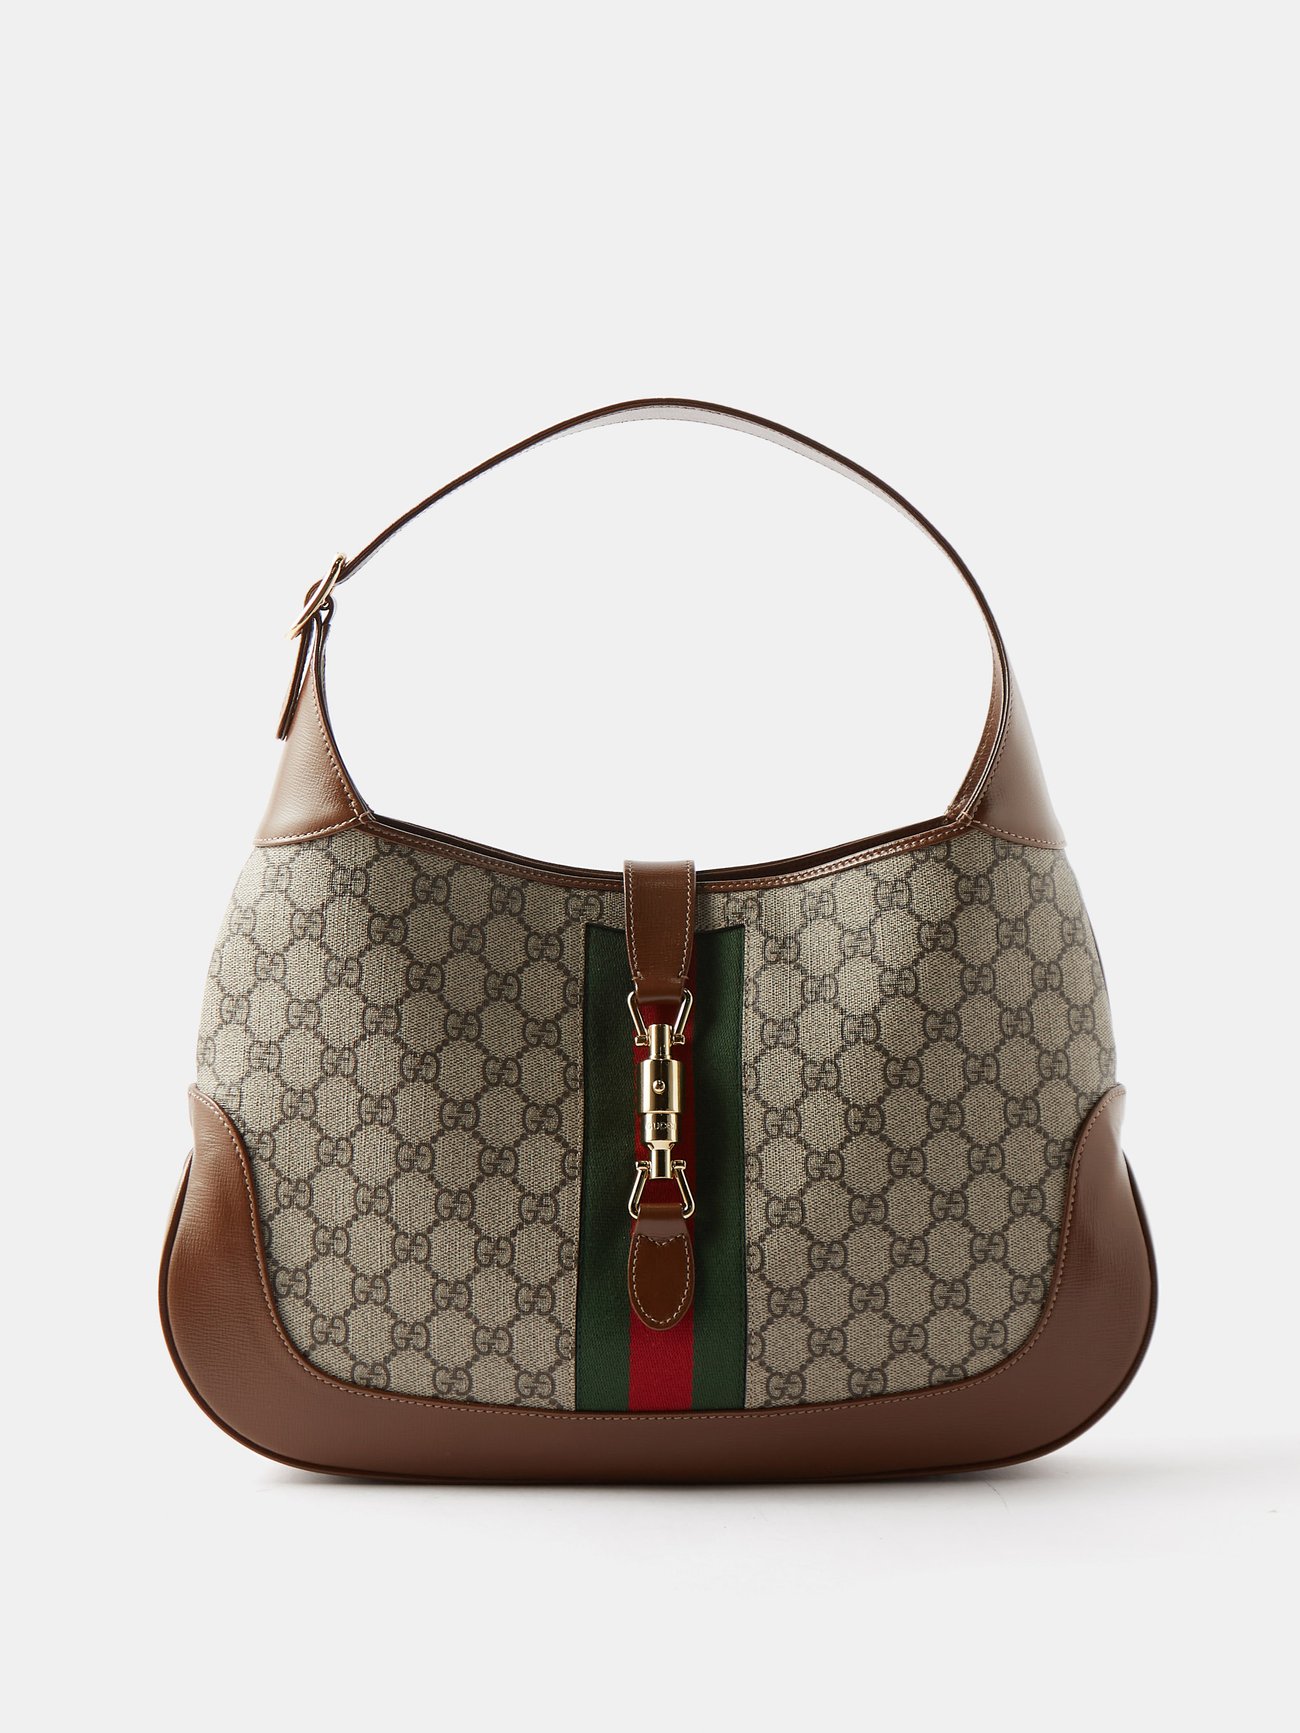 Authentic Gucci Jackie Crystal Shoulder Bag / Handbag 